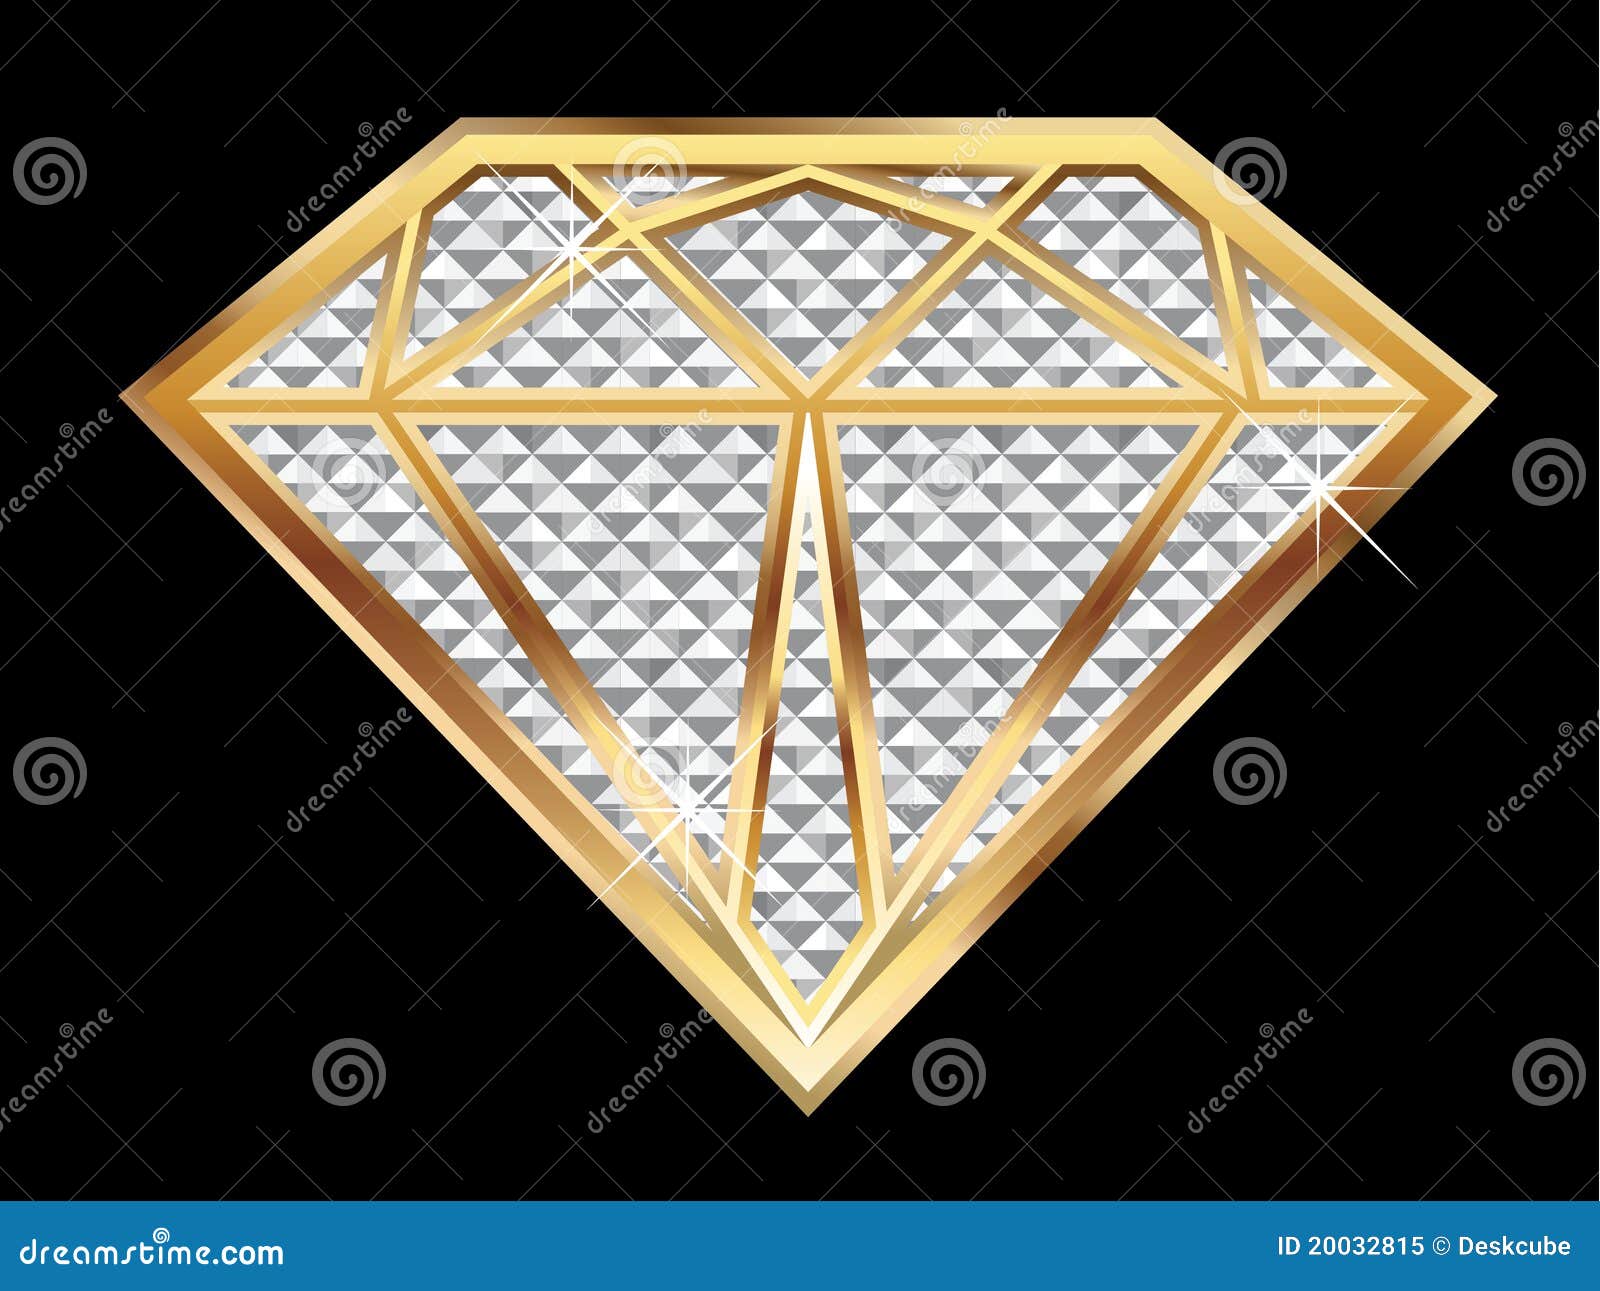 Diamond bling stock vector. Image of clip, retro, graphic 